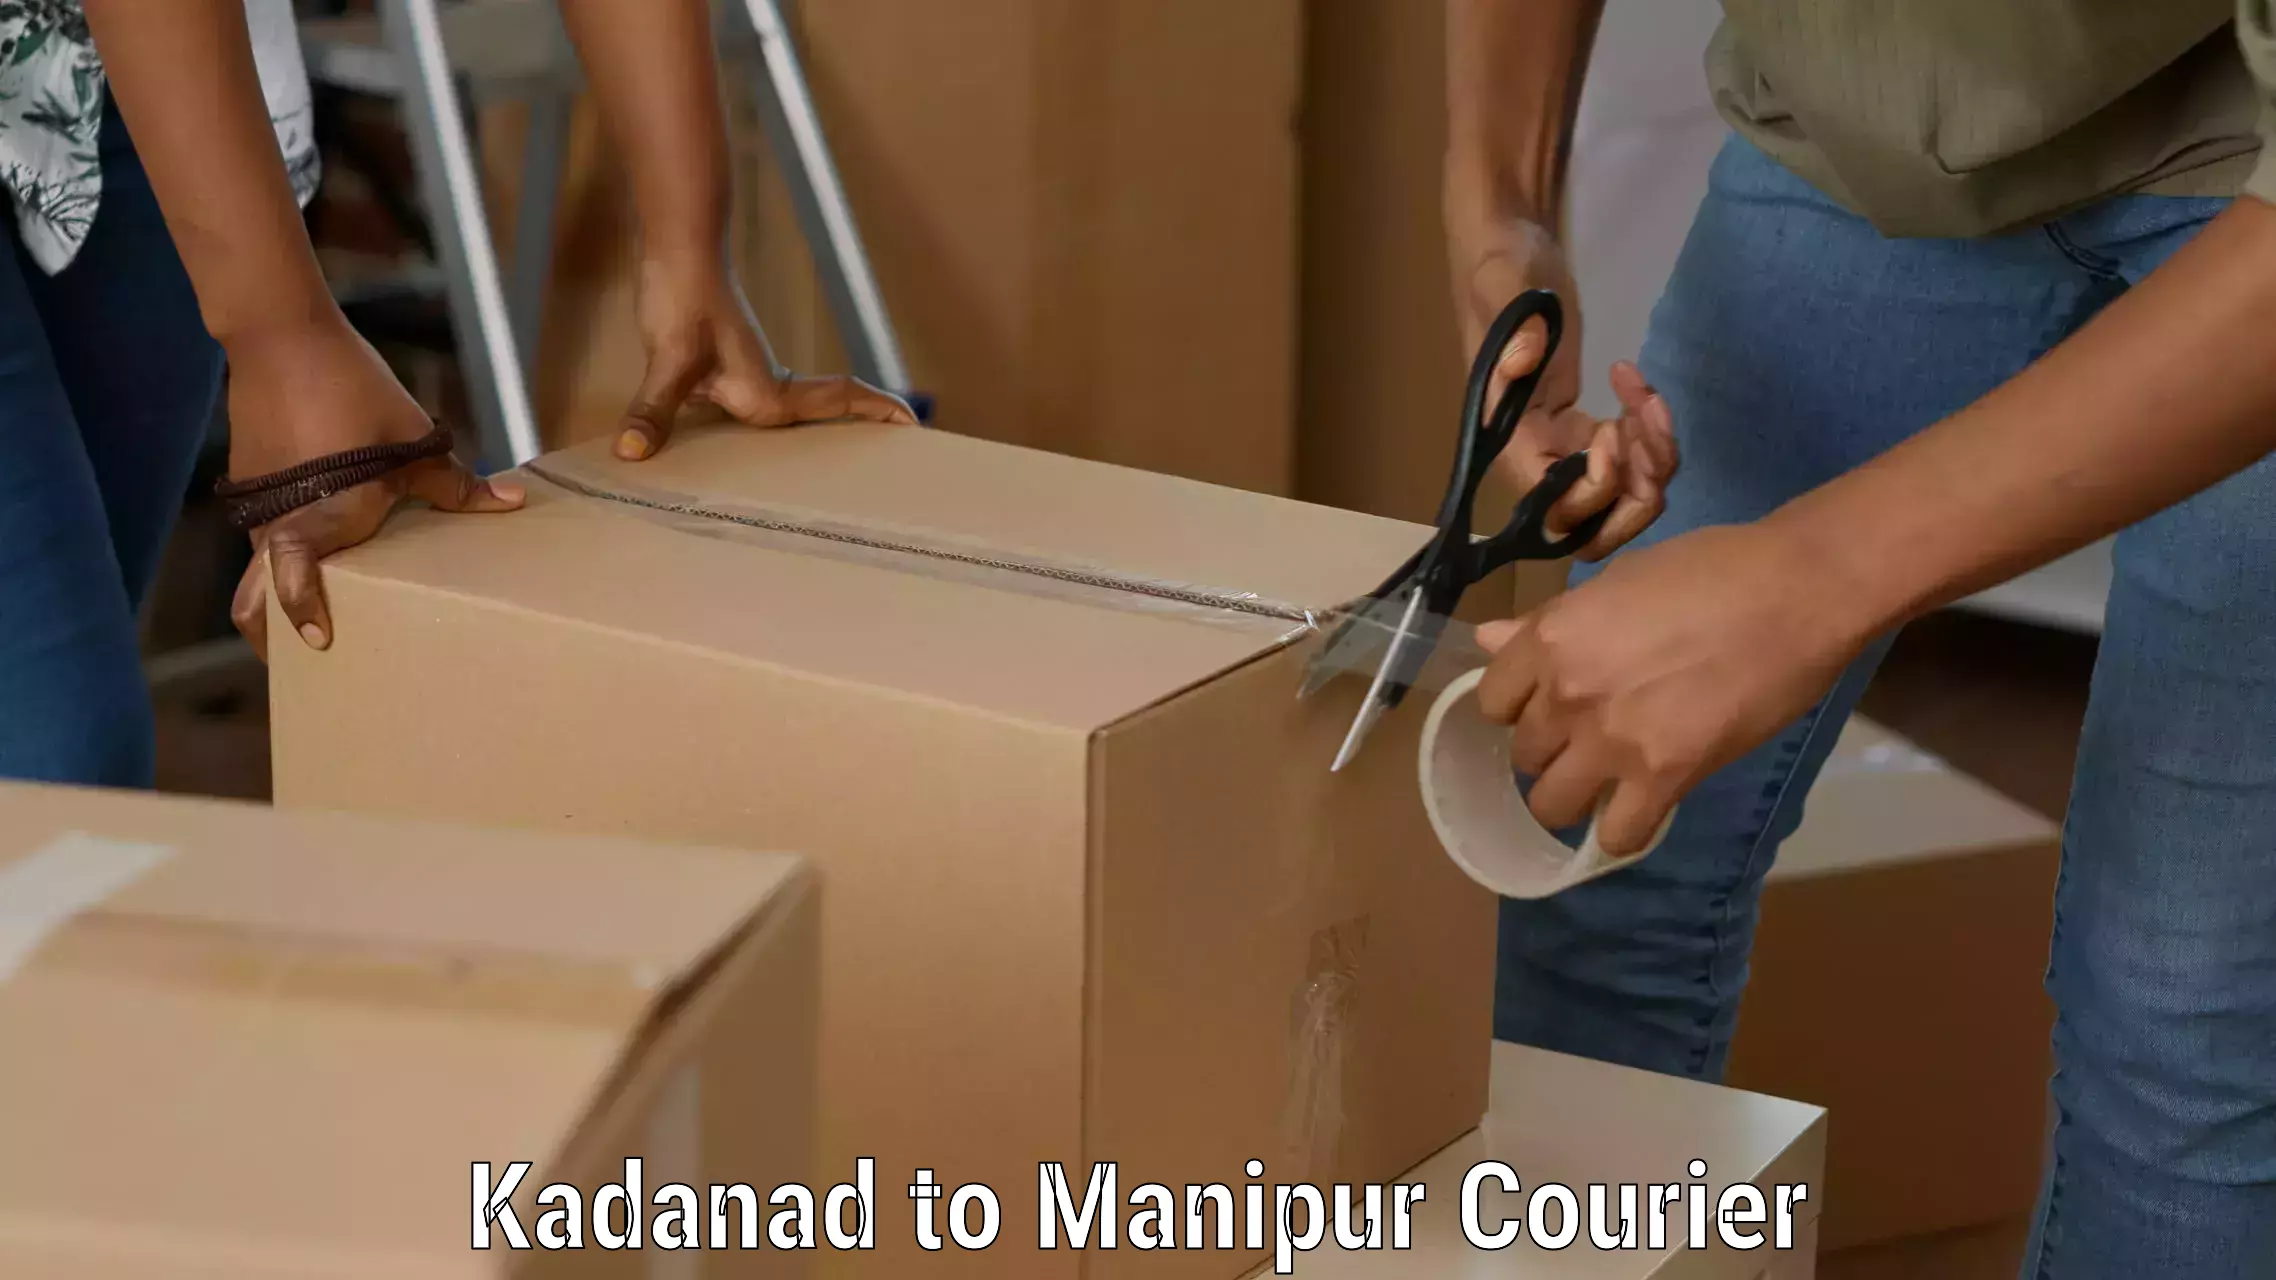 Courier service comparison Kadanad to Churachandpur